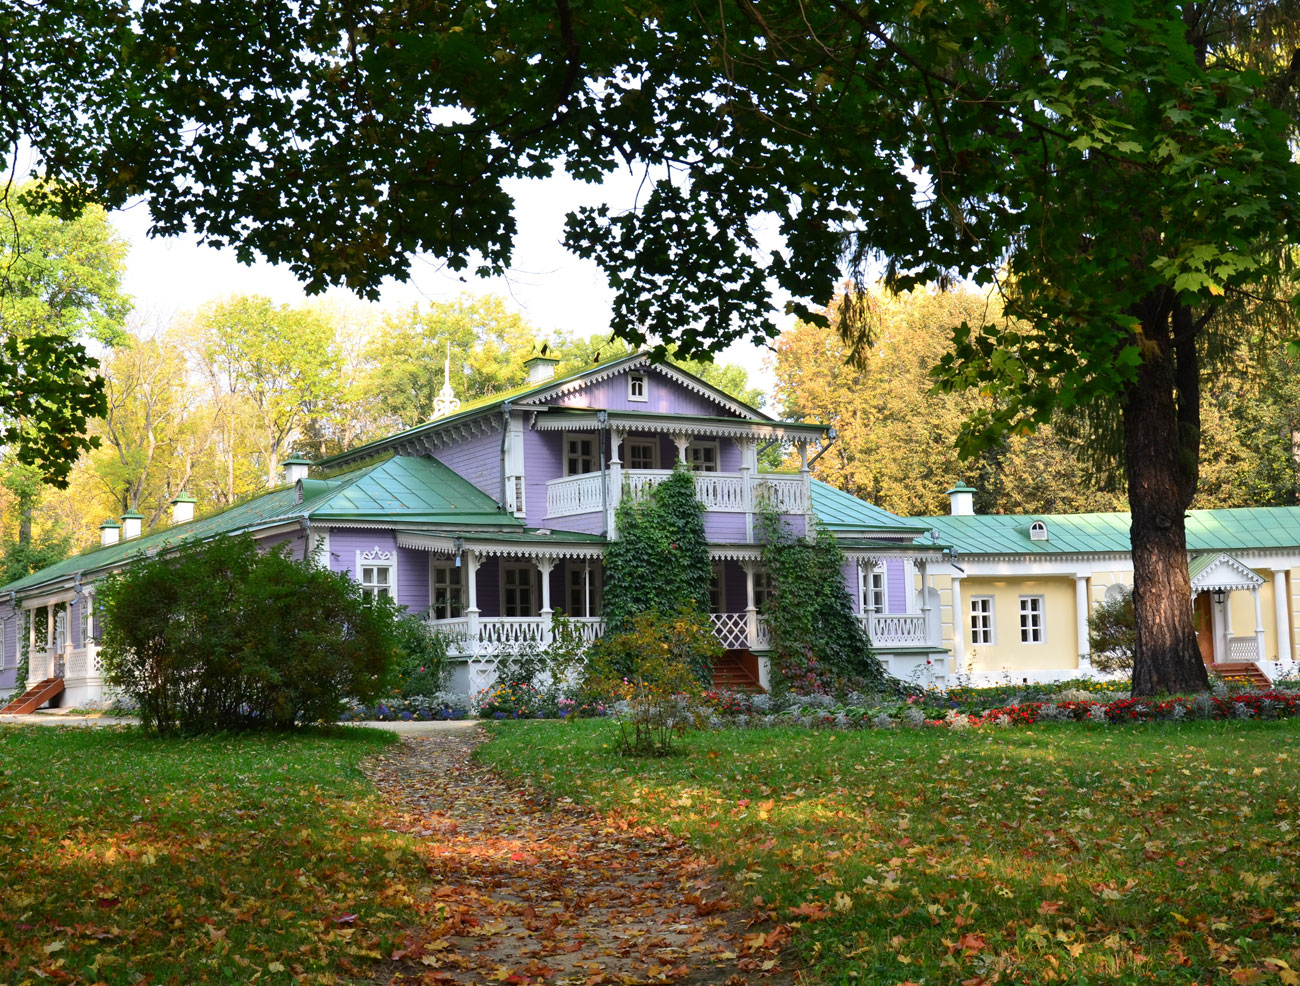 Ivan Turgenev's house in Spasskoye-Lutovinovo